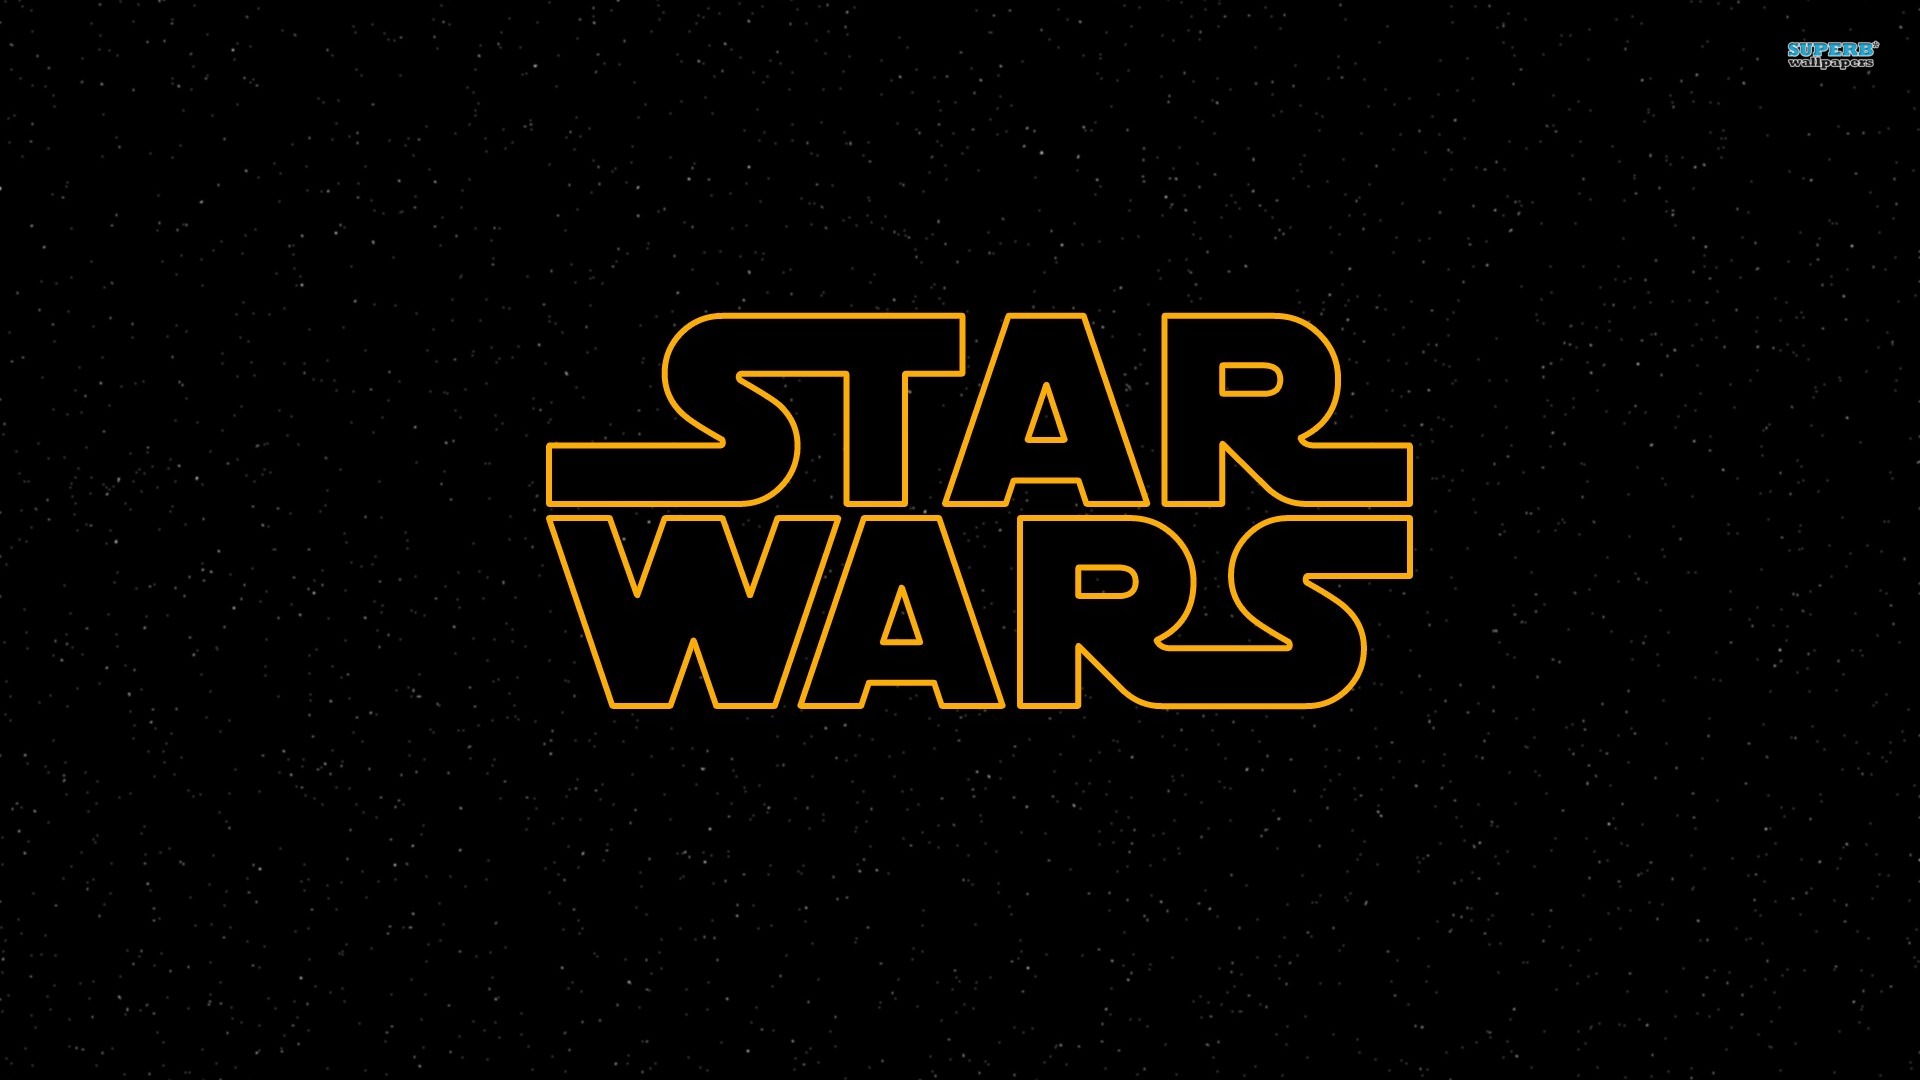 Star Wars Logo Wallpaper Widescreen High Resolution Full